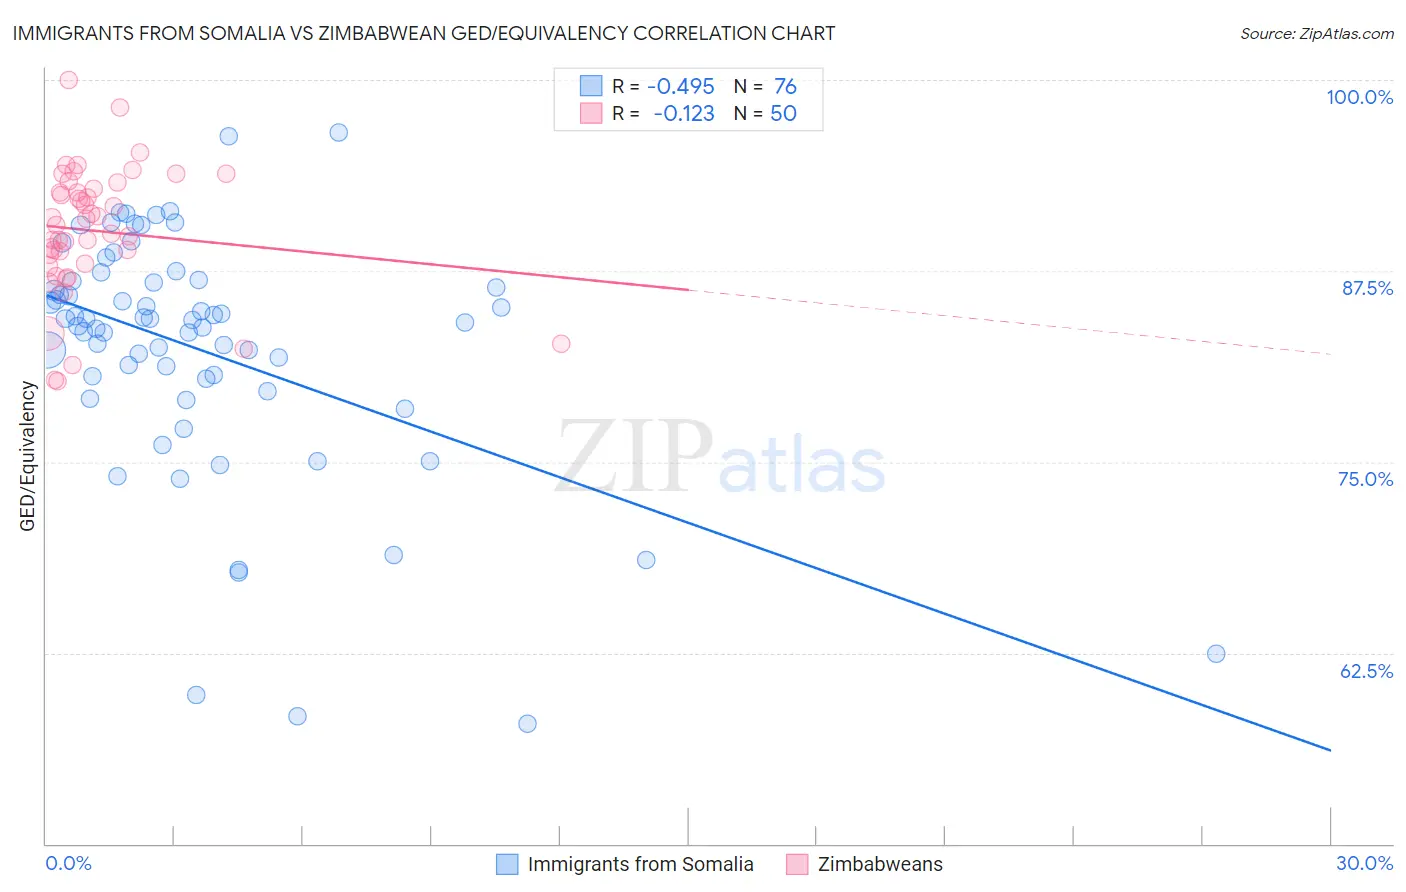 Immigrants from Somalia vs Zimbabwean GED/Equivalency